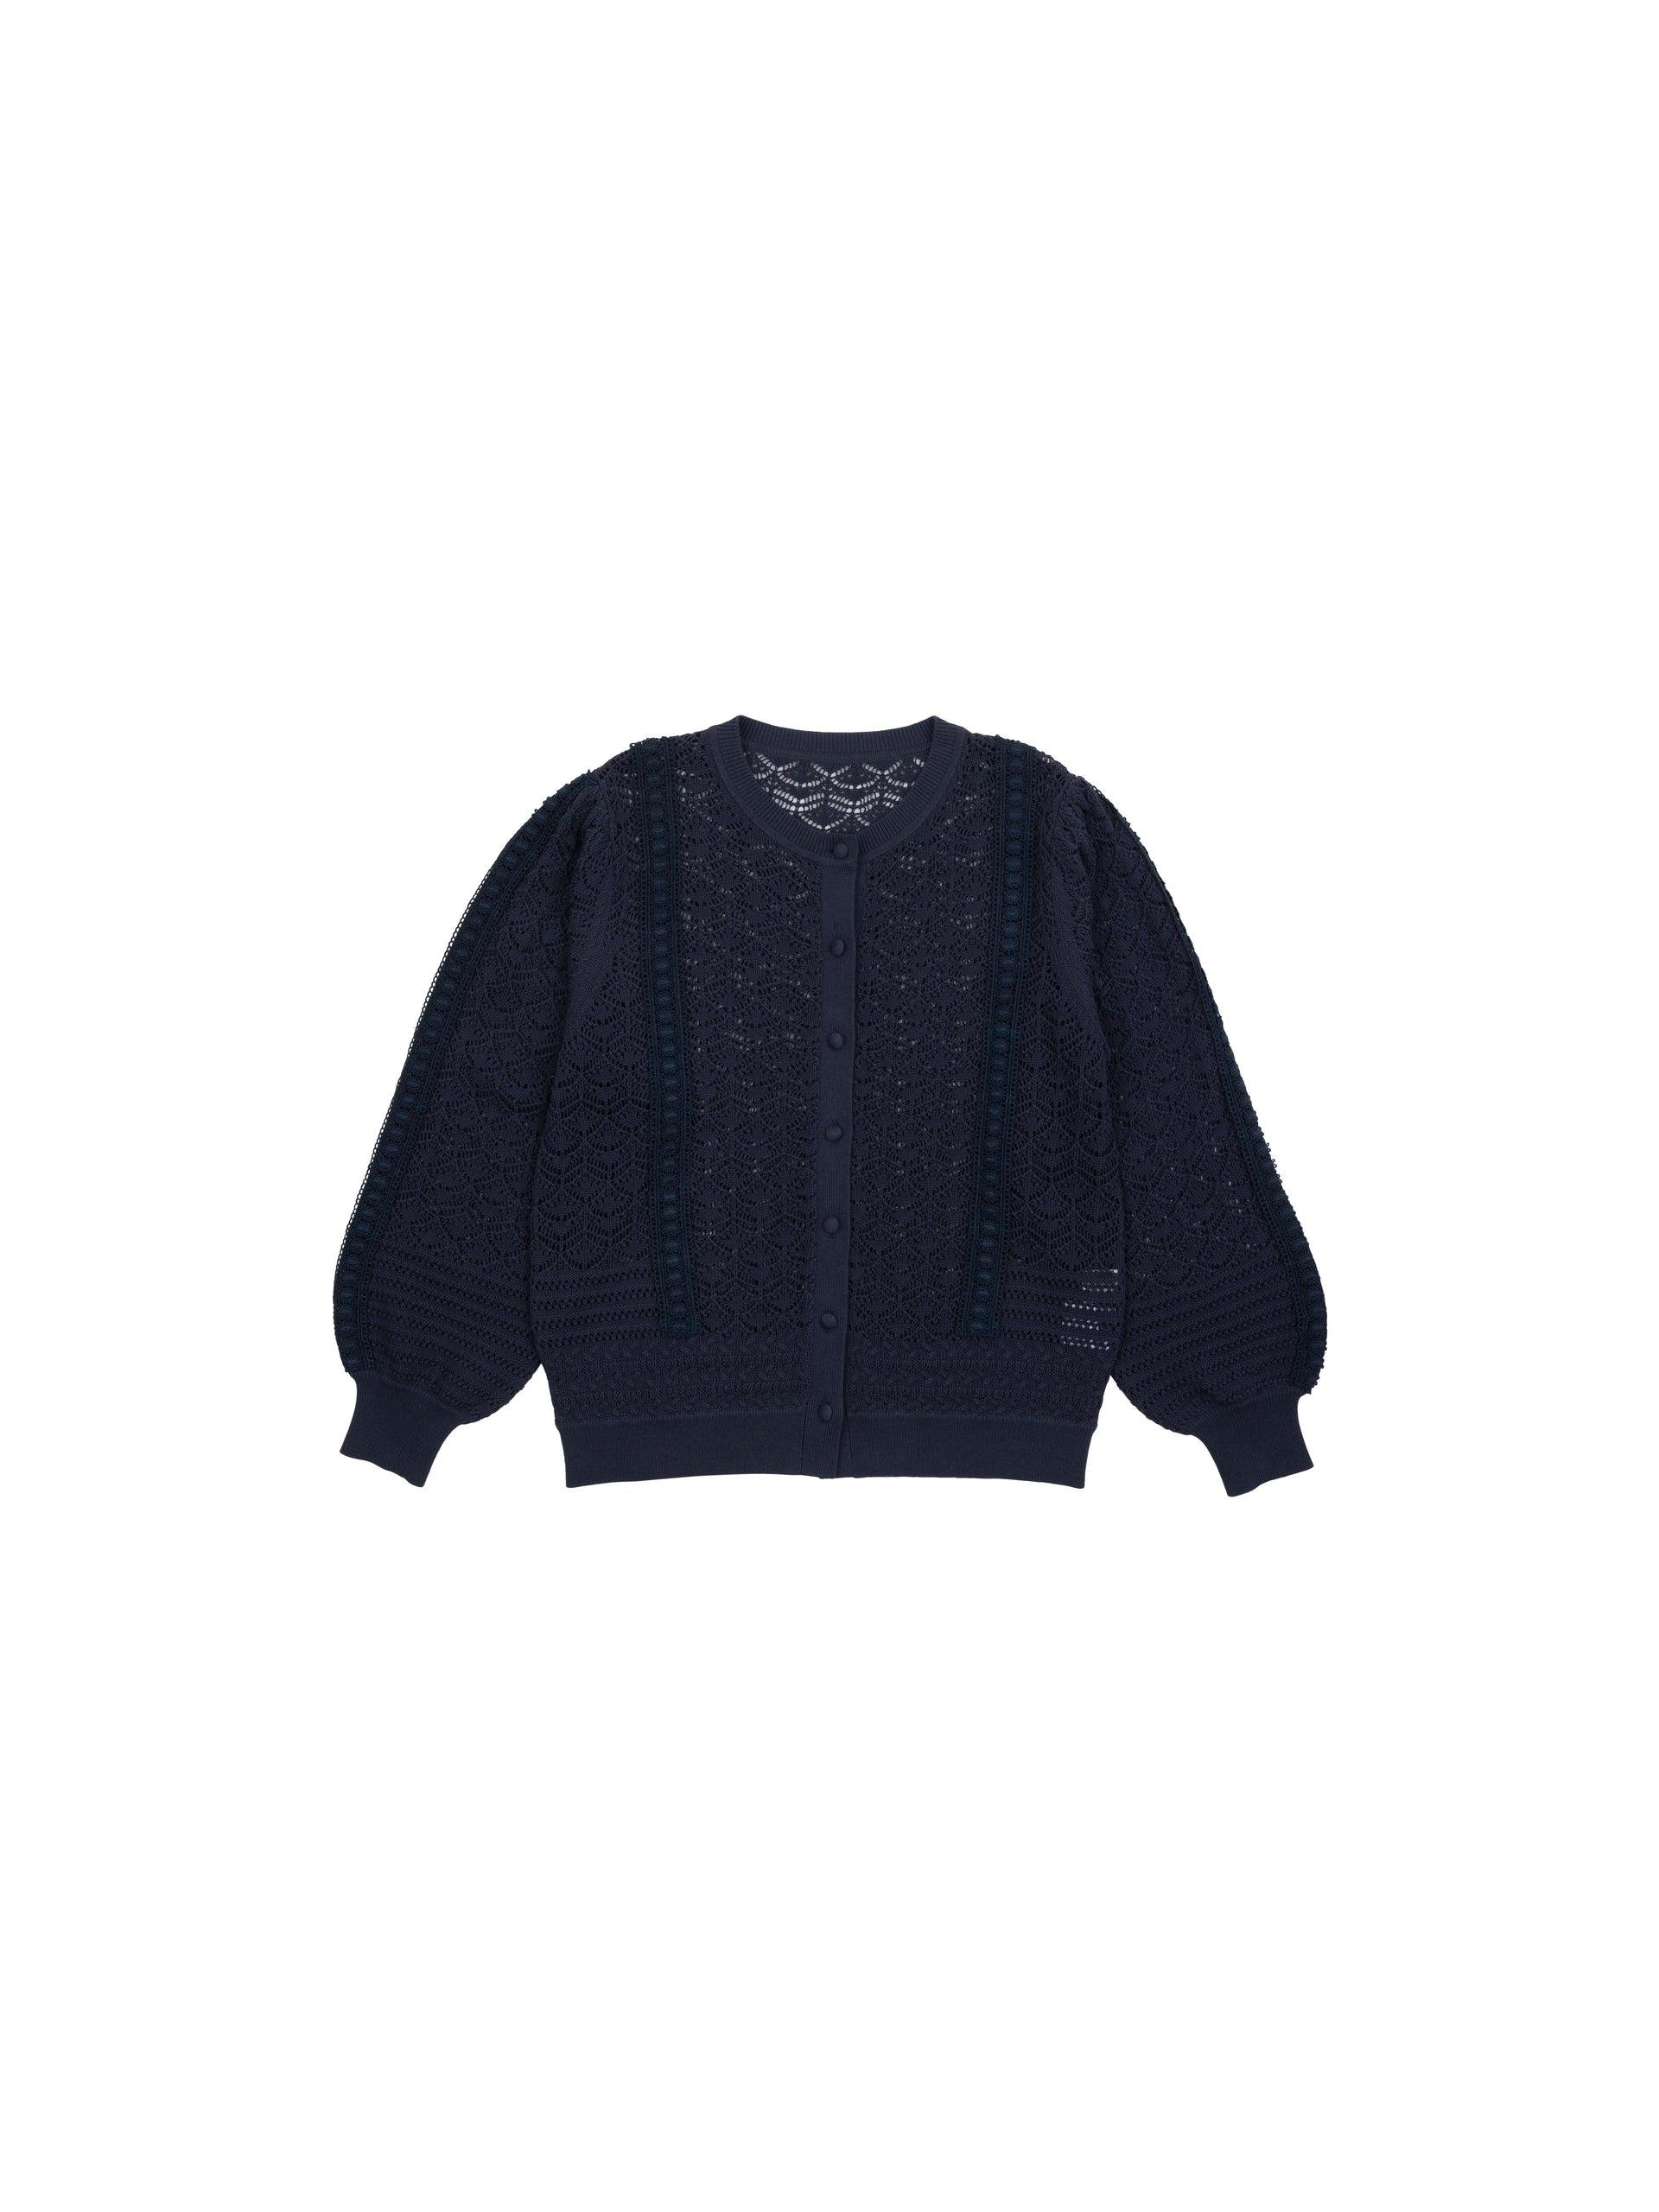 NORAH SUE Cotton Crochet Cardigan by COCKTAIL